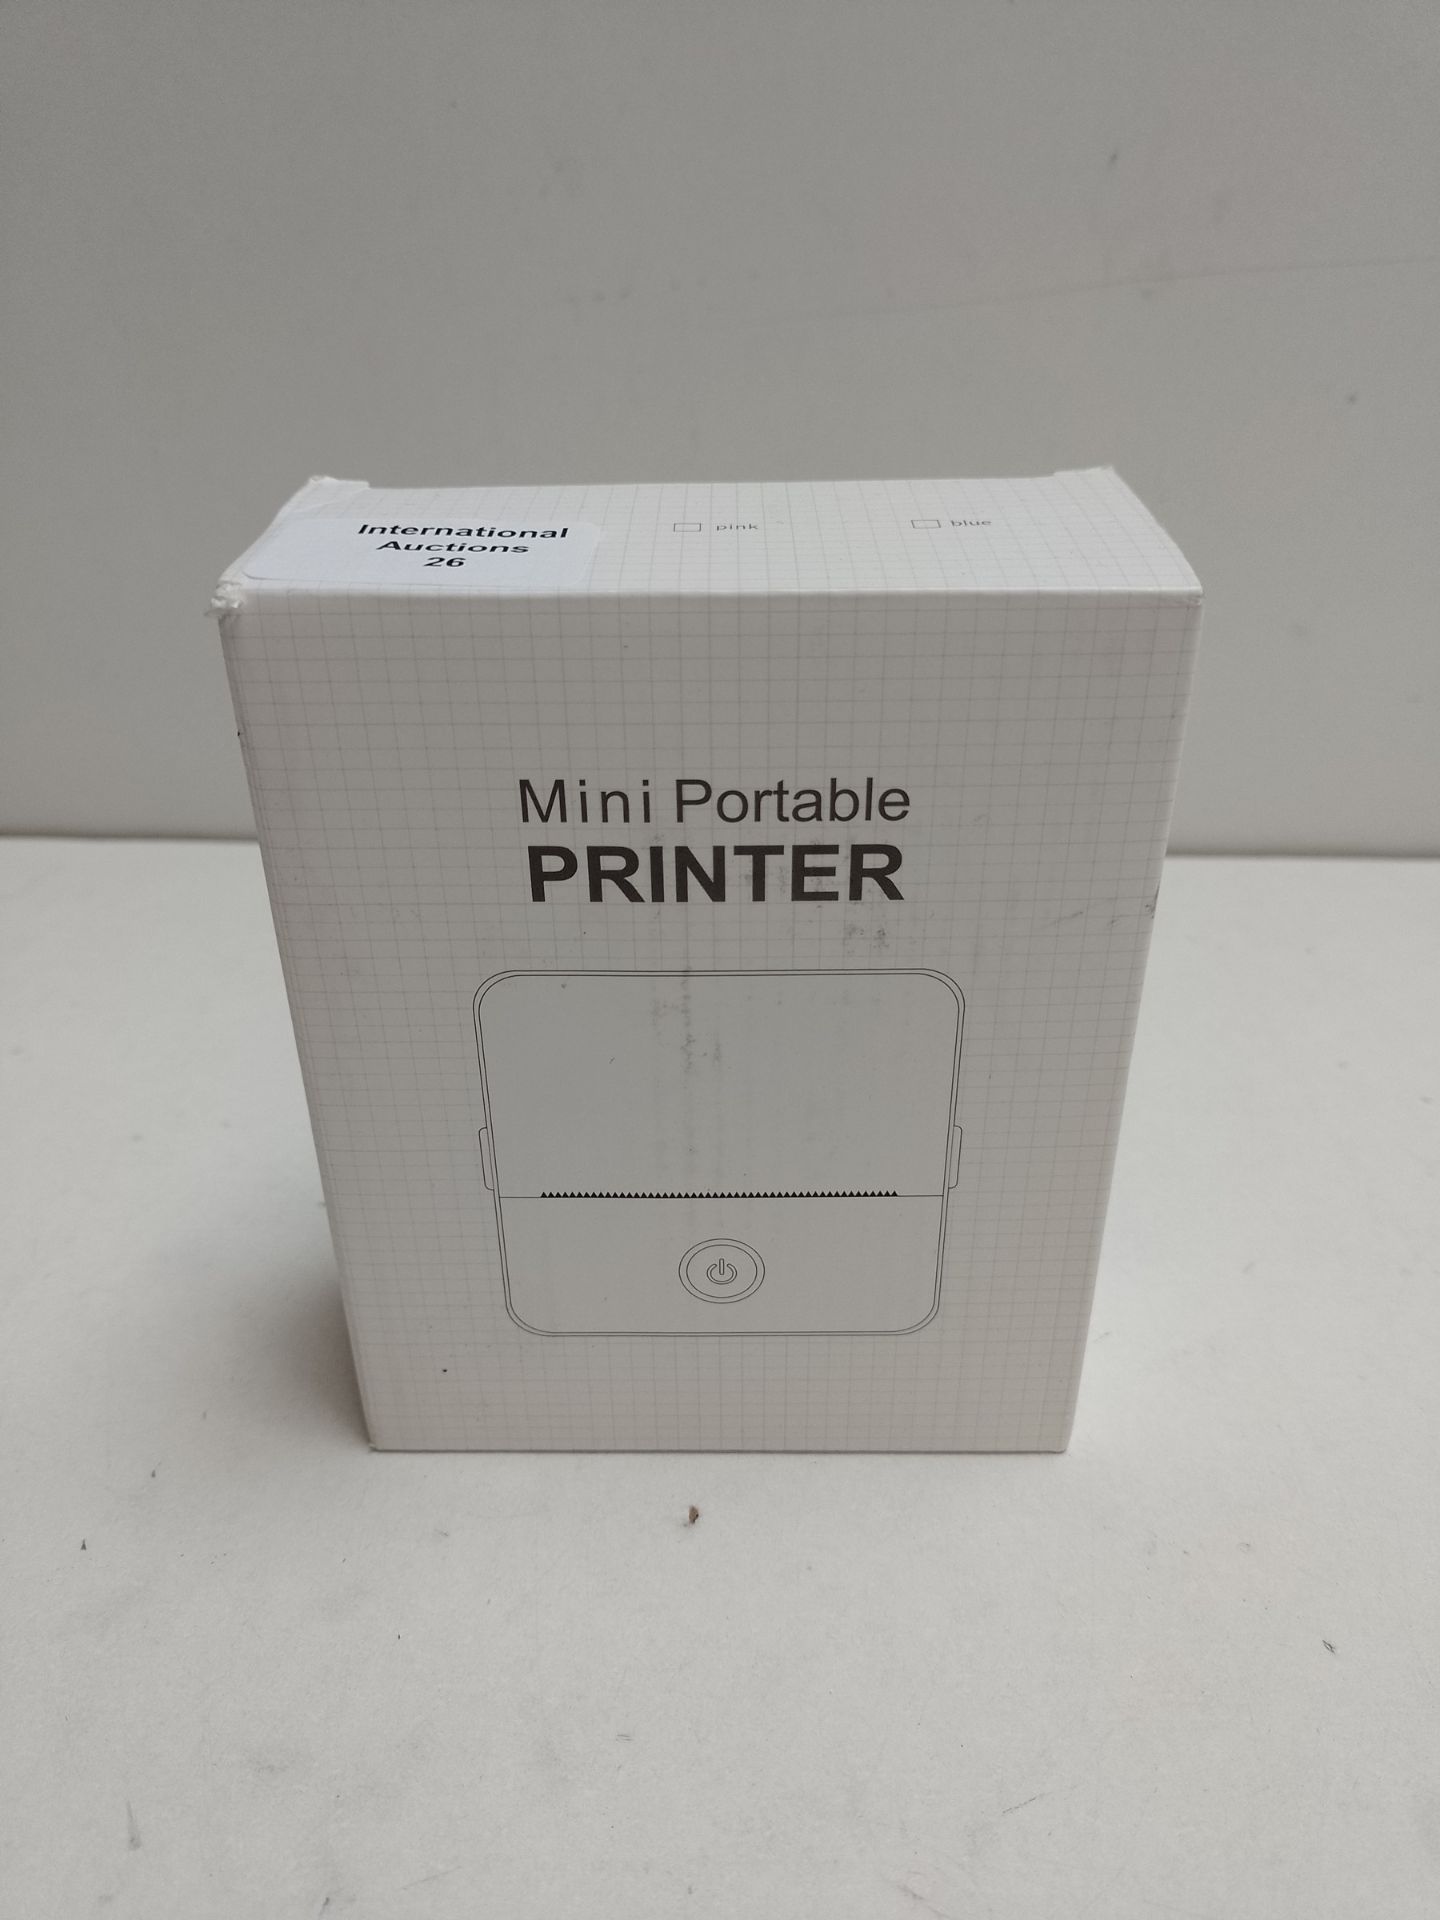 RRP £21.32 mafiti Mini Printer - Image 2 of 2